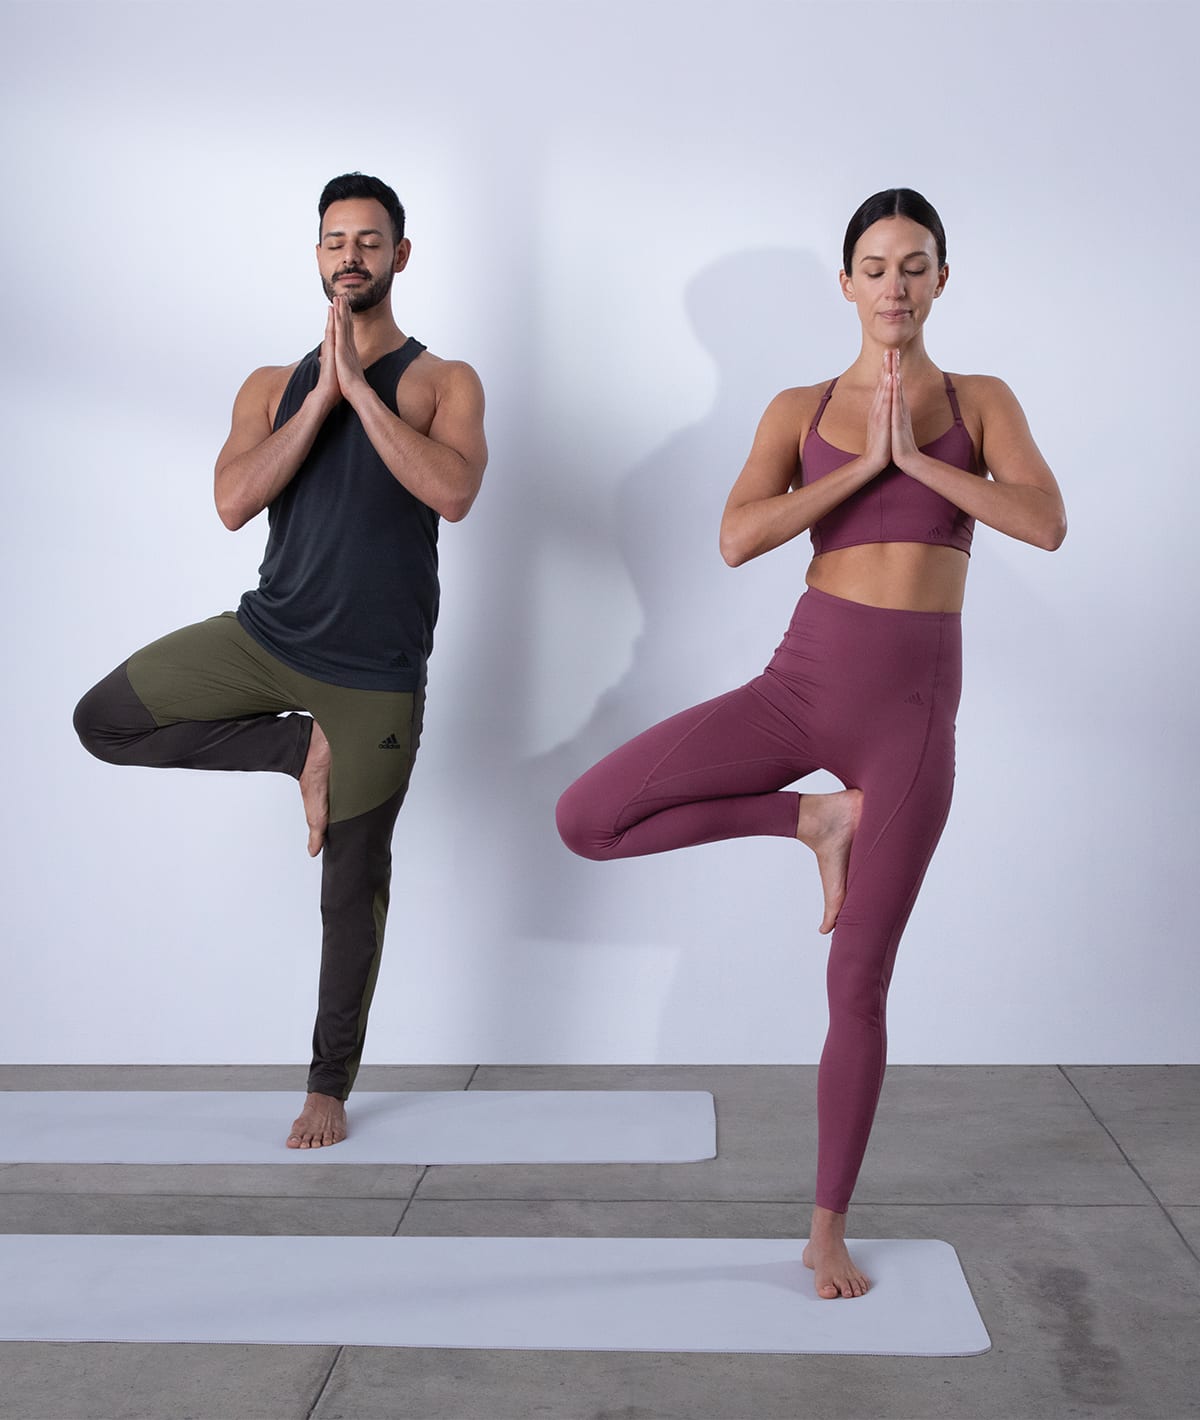 Why You Should Wear Proper Attire for Yoga